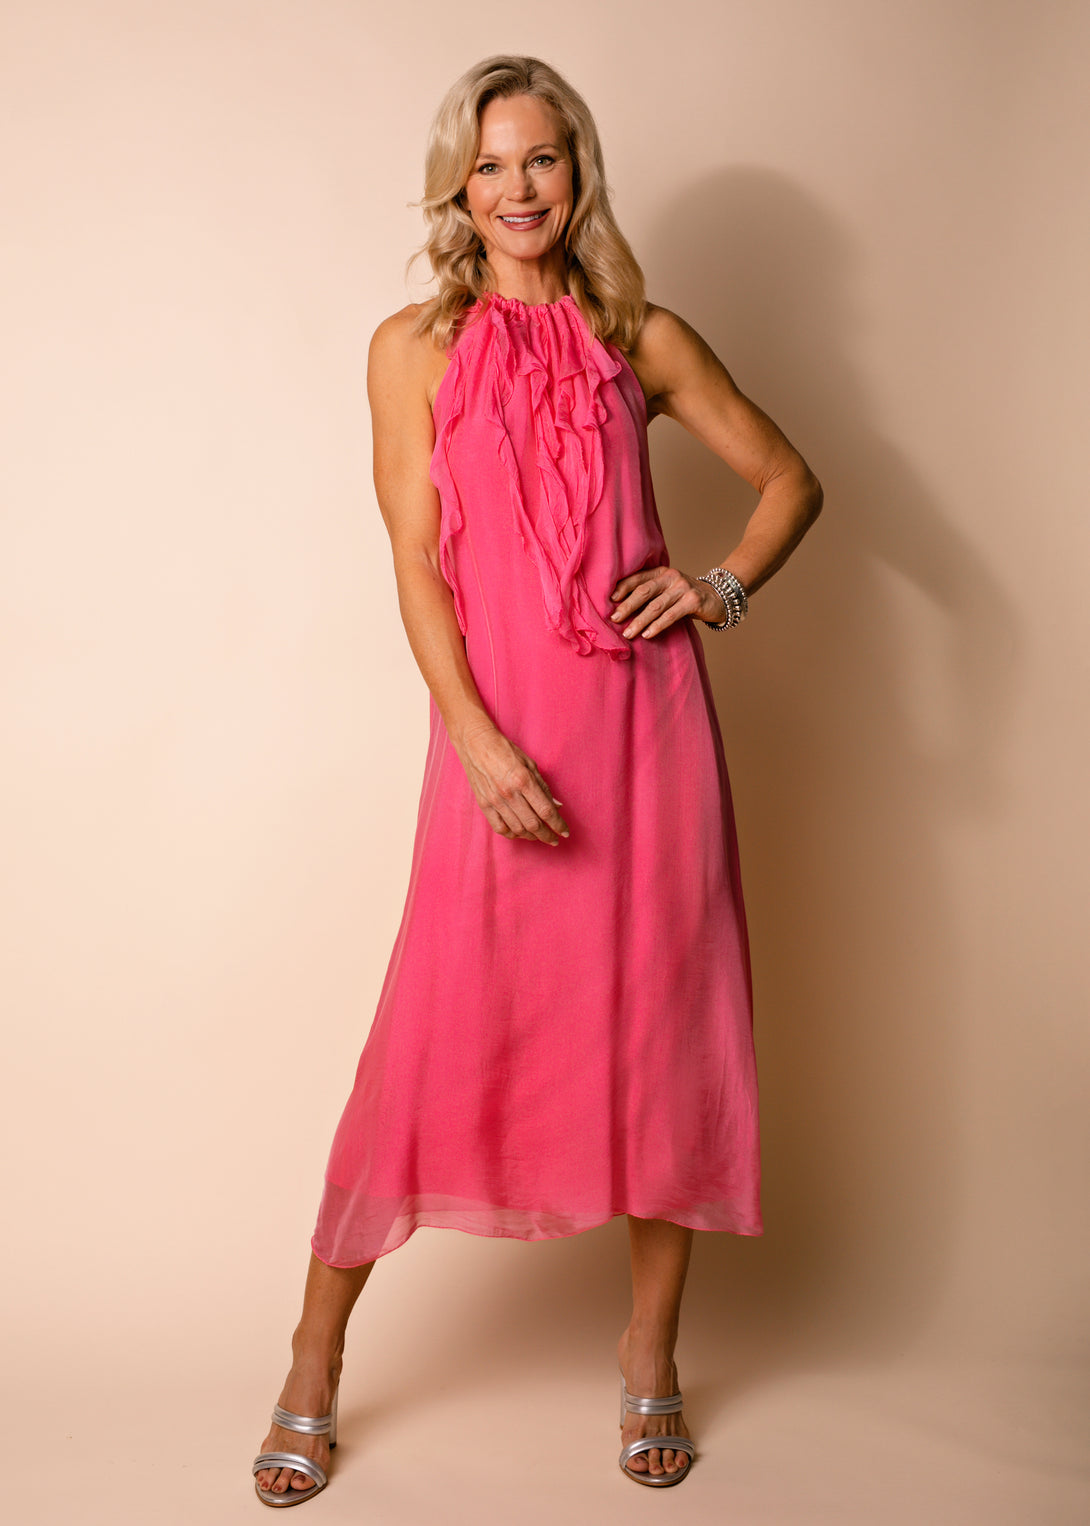 Cadence Silk Dress in Raspberry Sorbet - Imagine Fashion